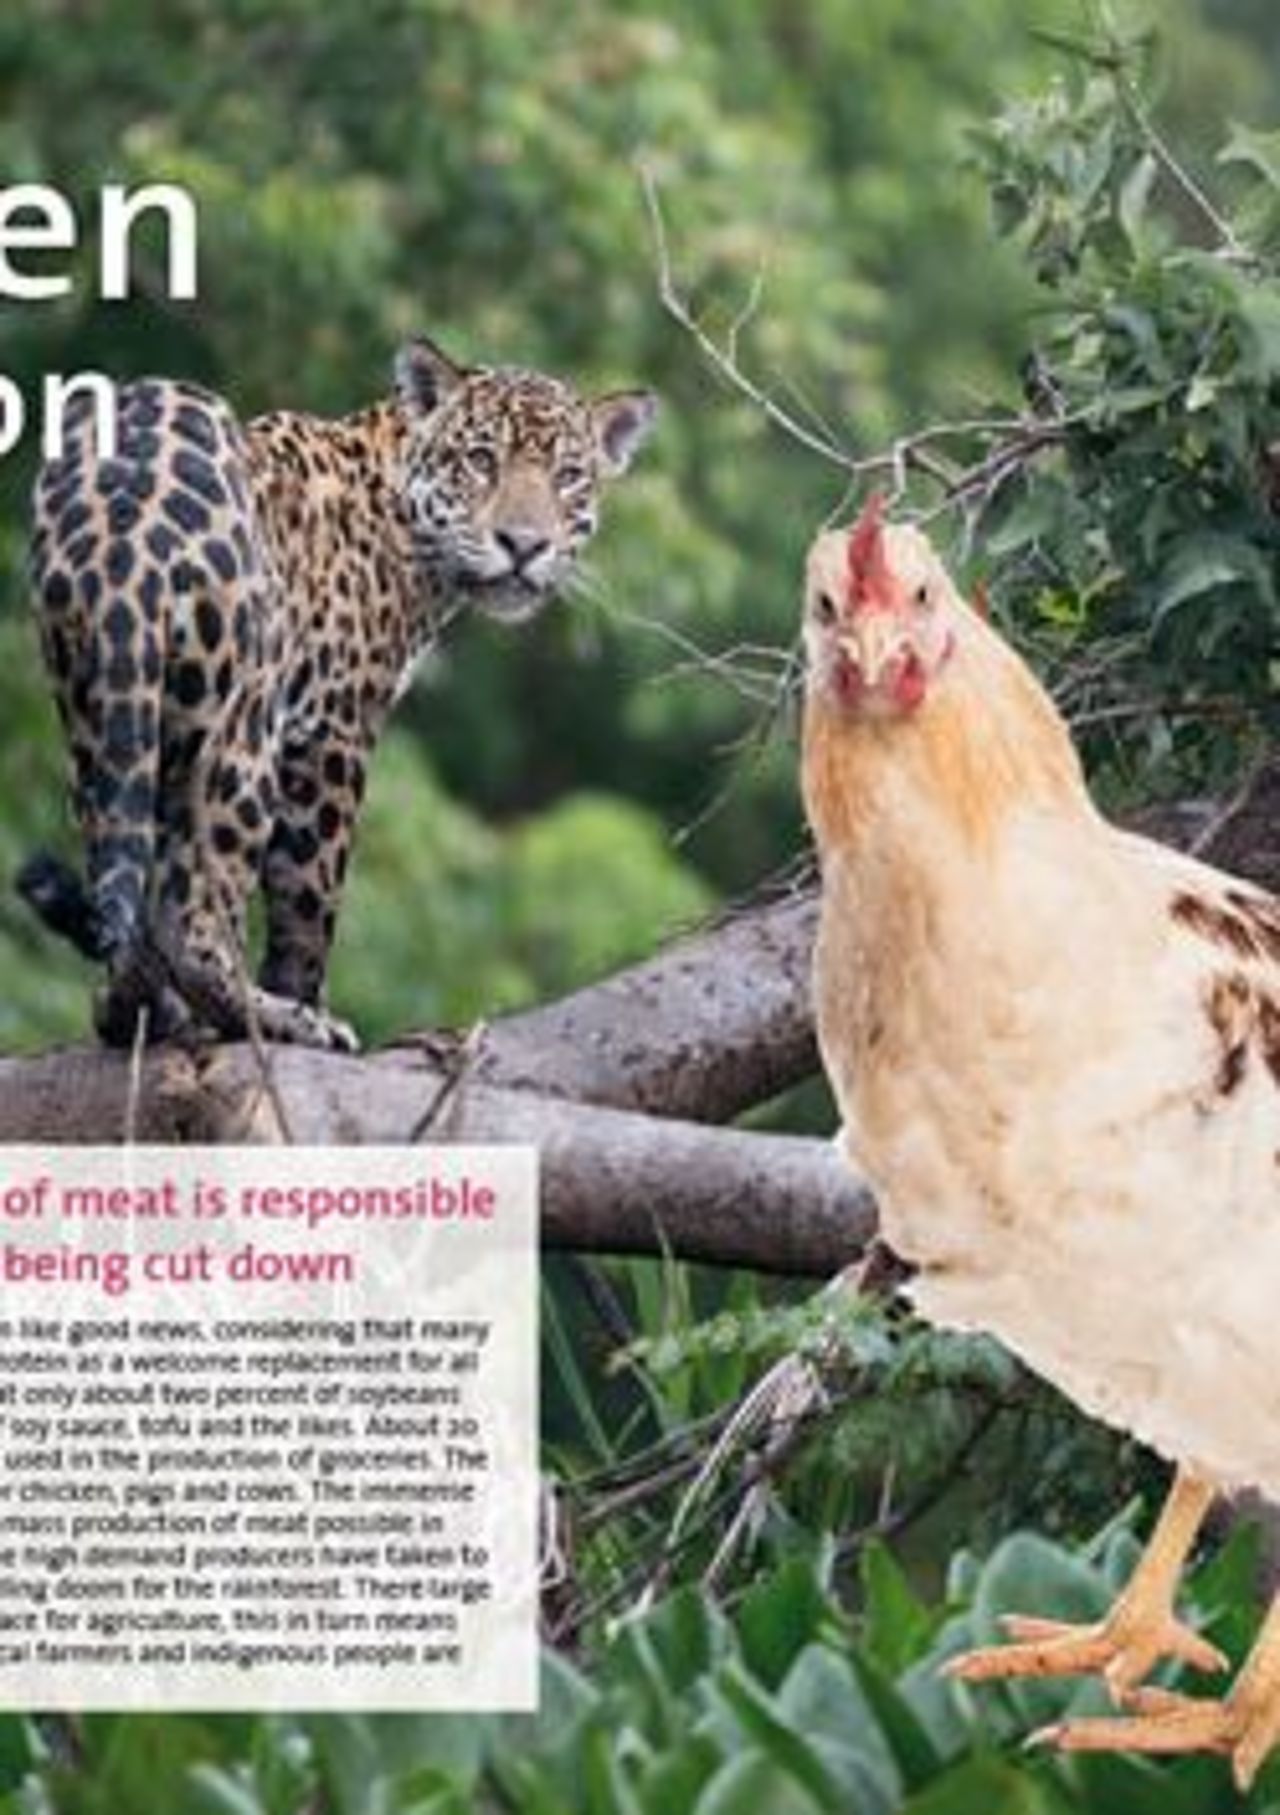 Chicken - Feasts on Jaguar - Factsheet by OroVerde